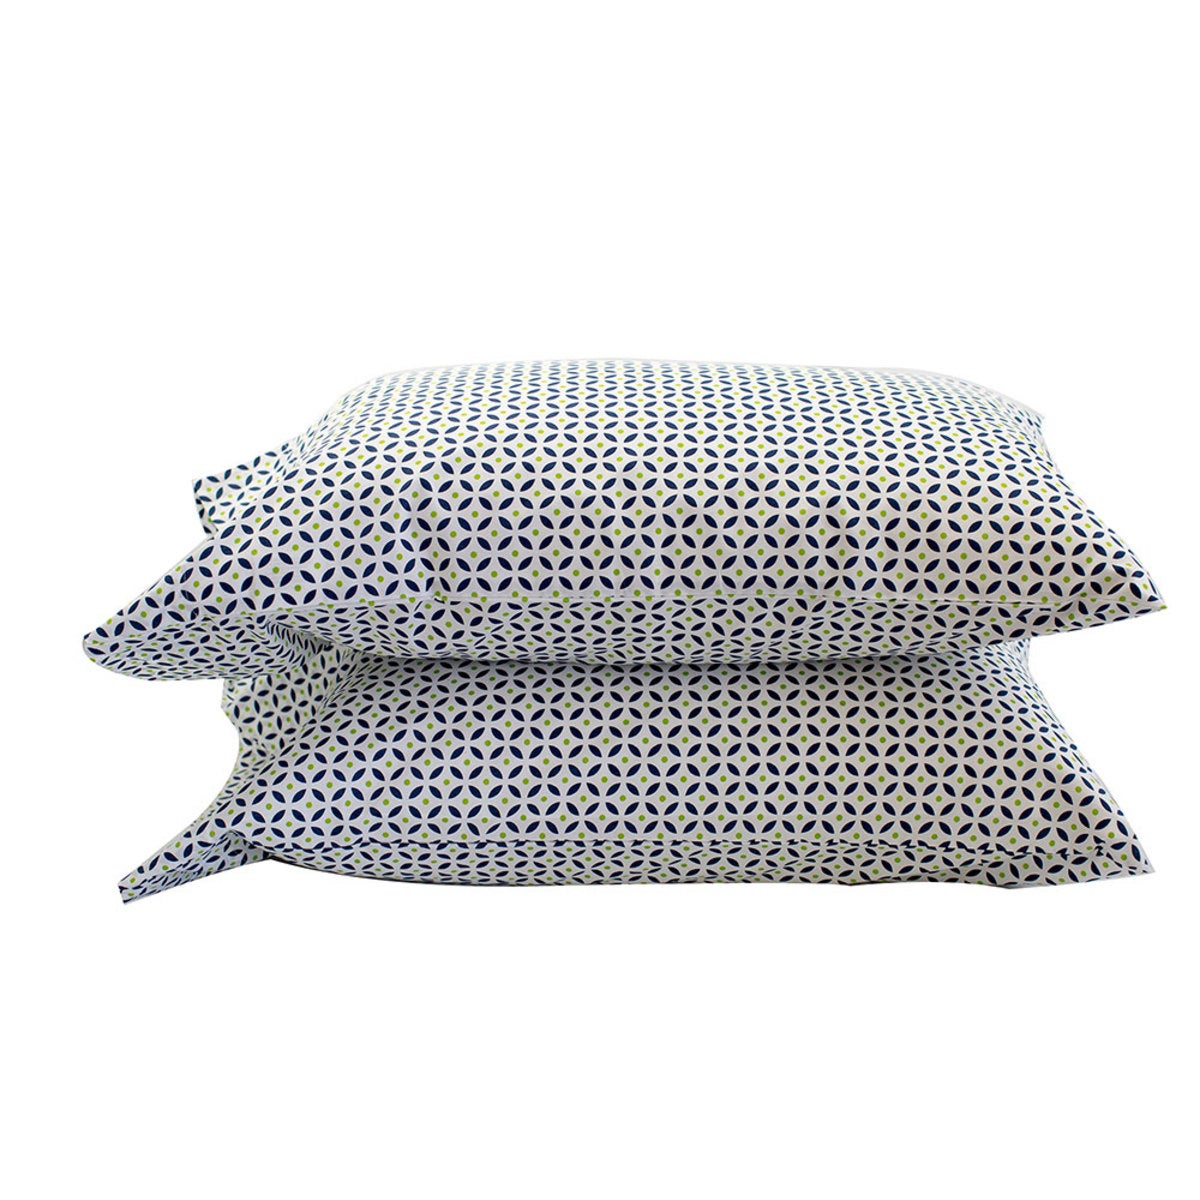 Kaleidoscope Standard Pillow Cases, Set of 2